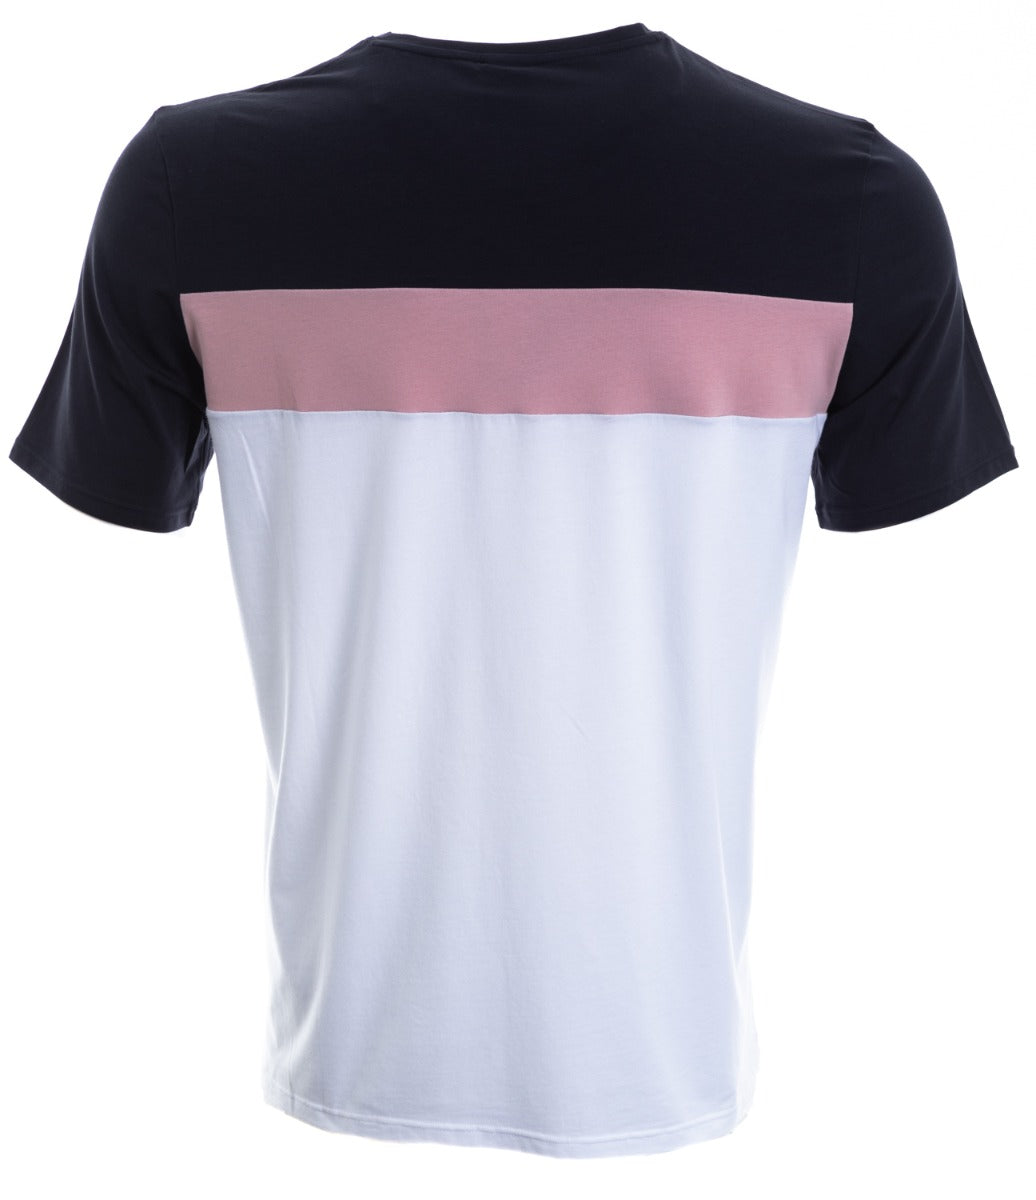 BOSS Balance T Shirt in Navy, Pink & White Back